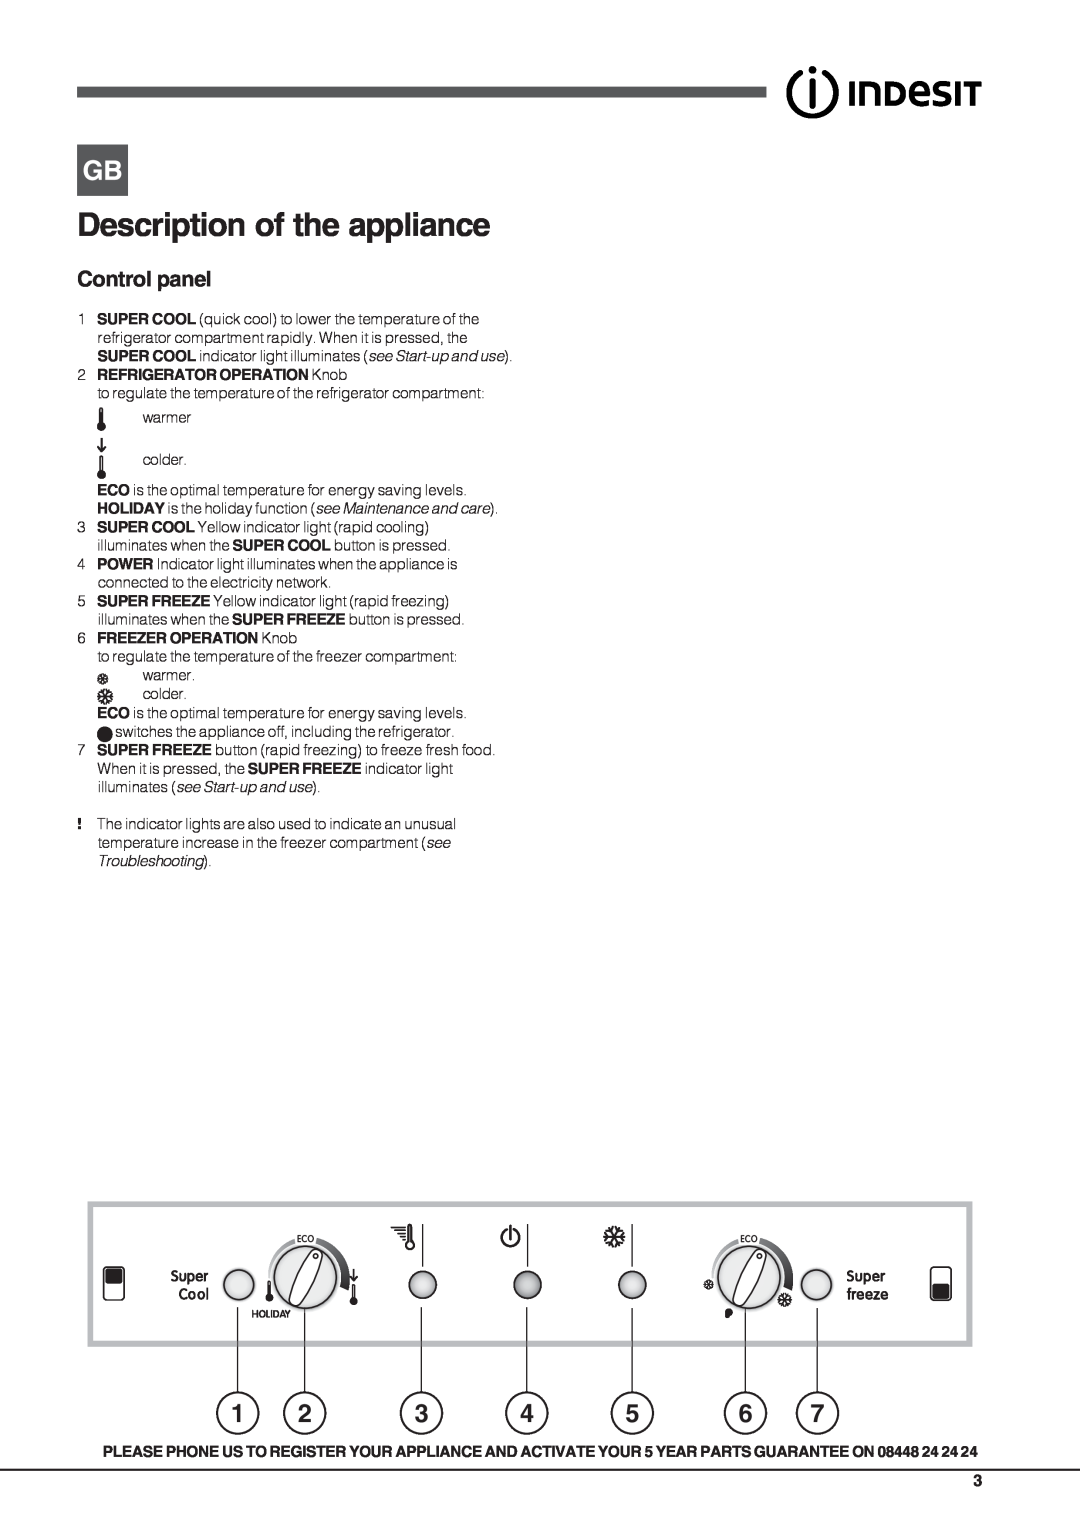 Indesit BAN 40 Description of the appliance, Control panel, REFRIGERATOR OPERATION Knob, FREEZER OPERATION Knob, 271eps 